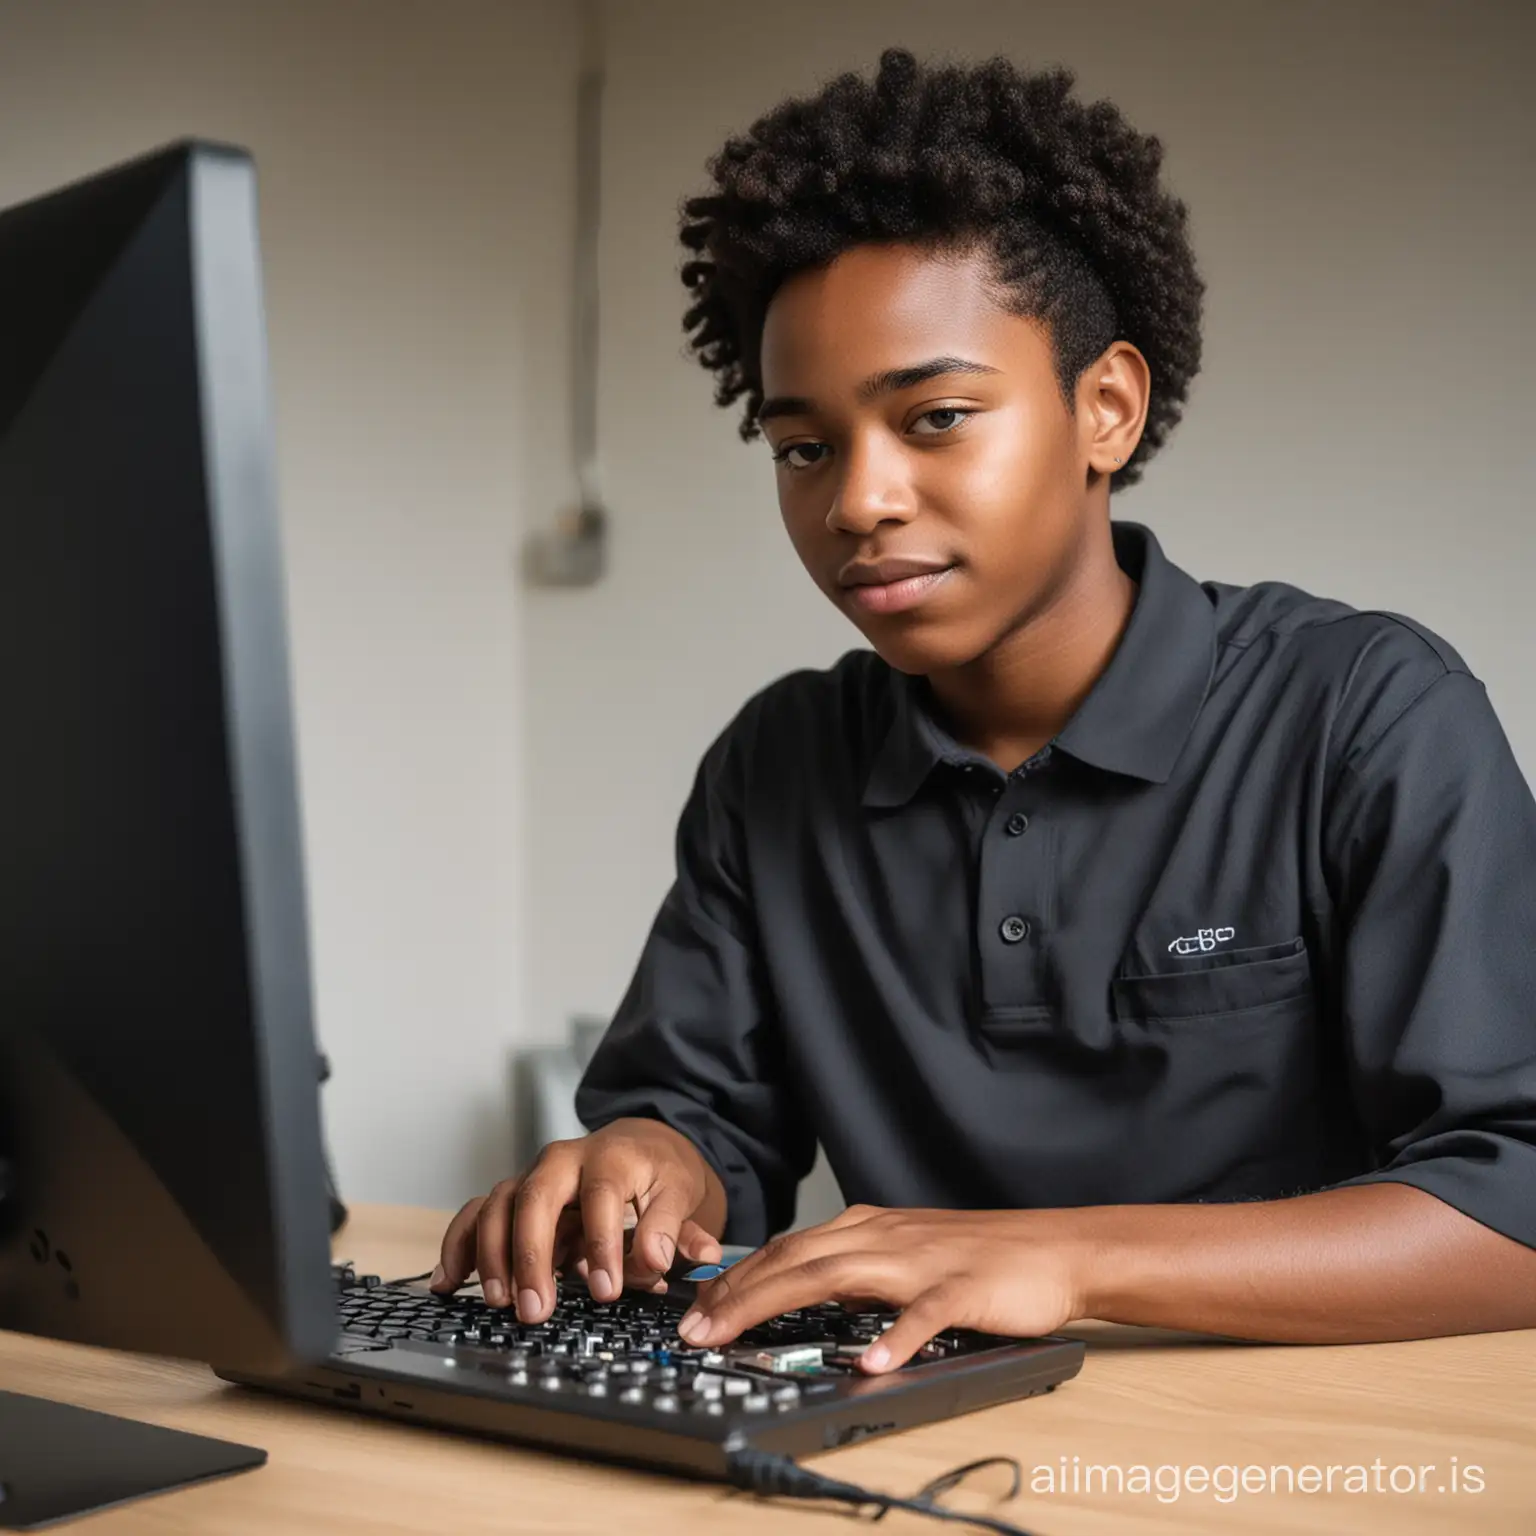 a young black person doing a tech job